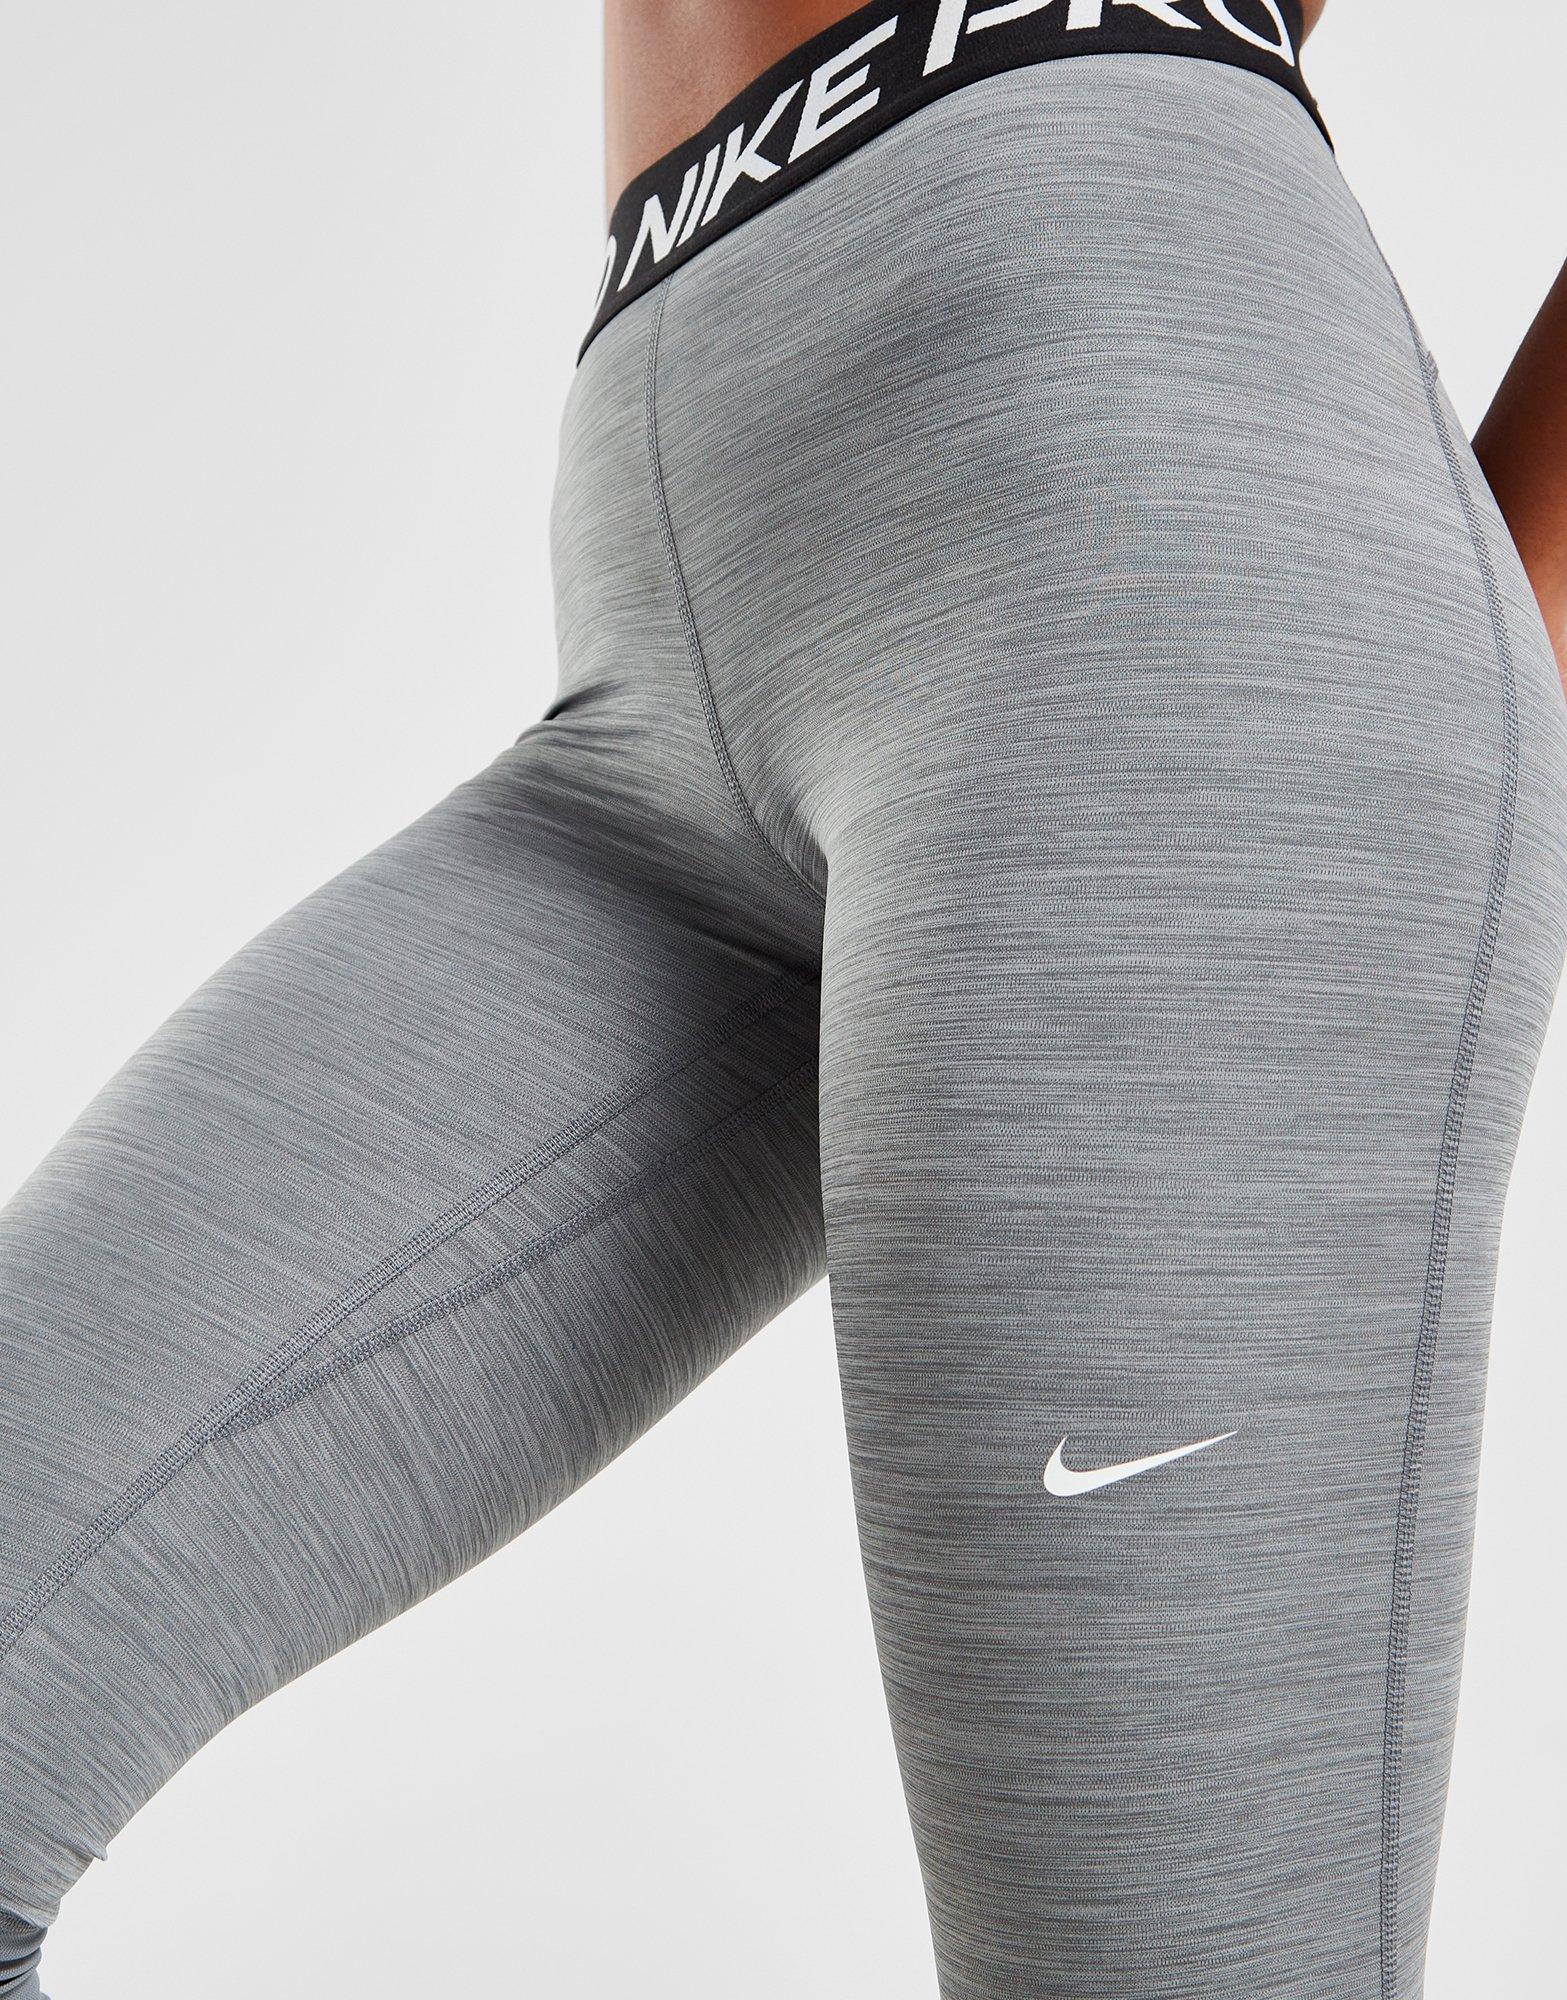 Nike Pro Warm Static Tight Womens Small Gray Dri Fit Athletic Leggings